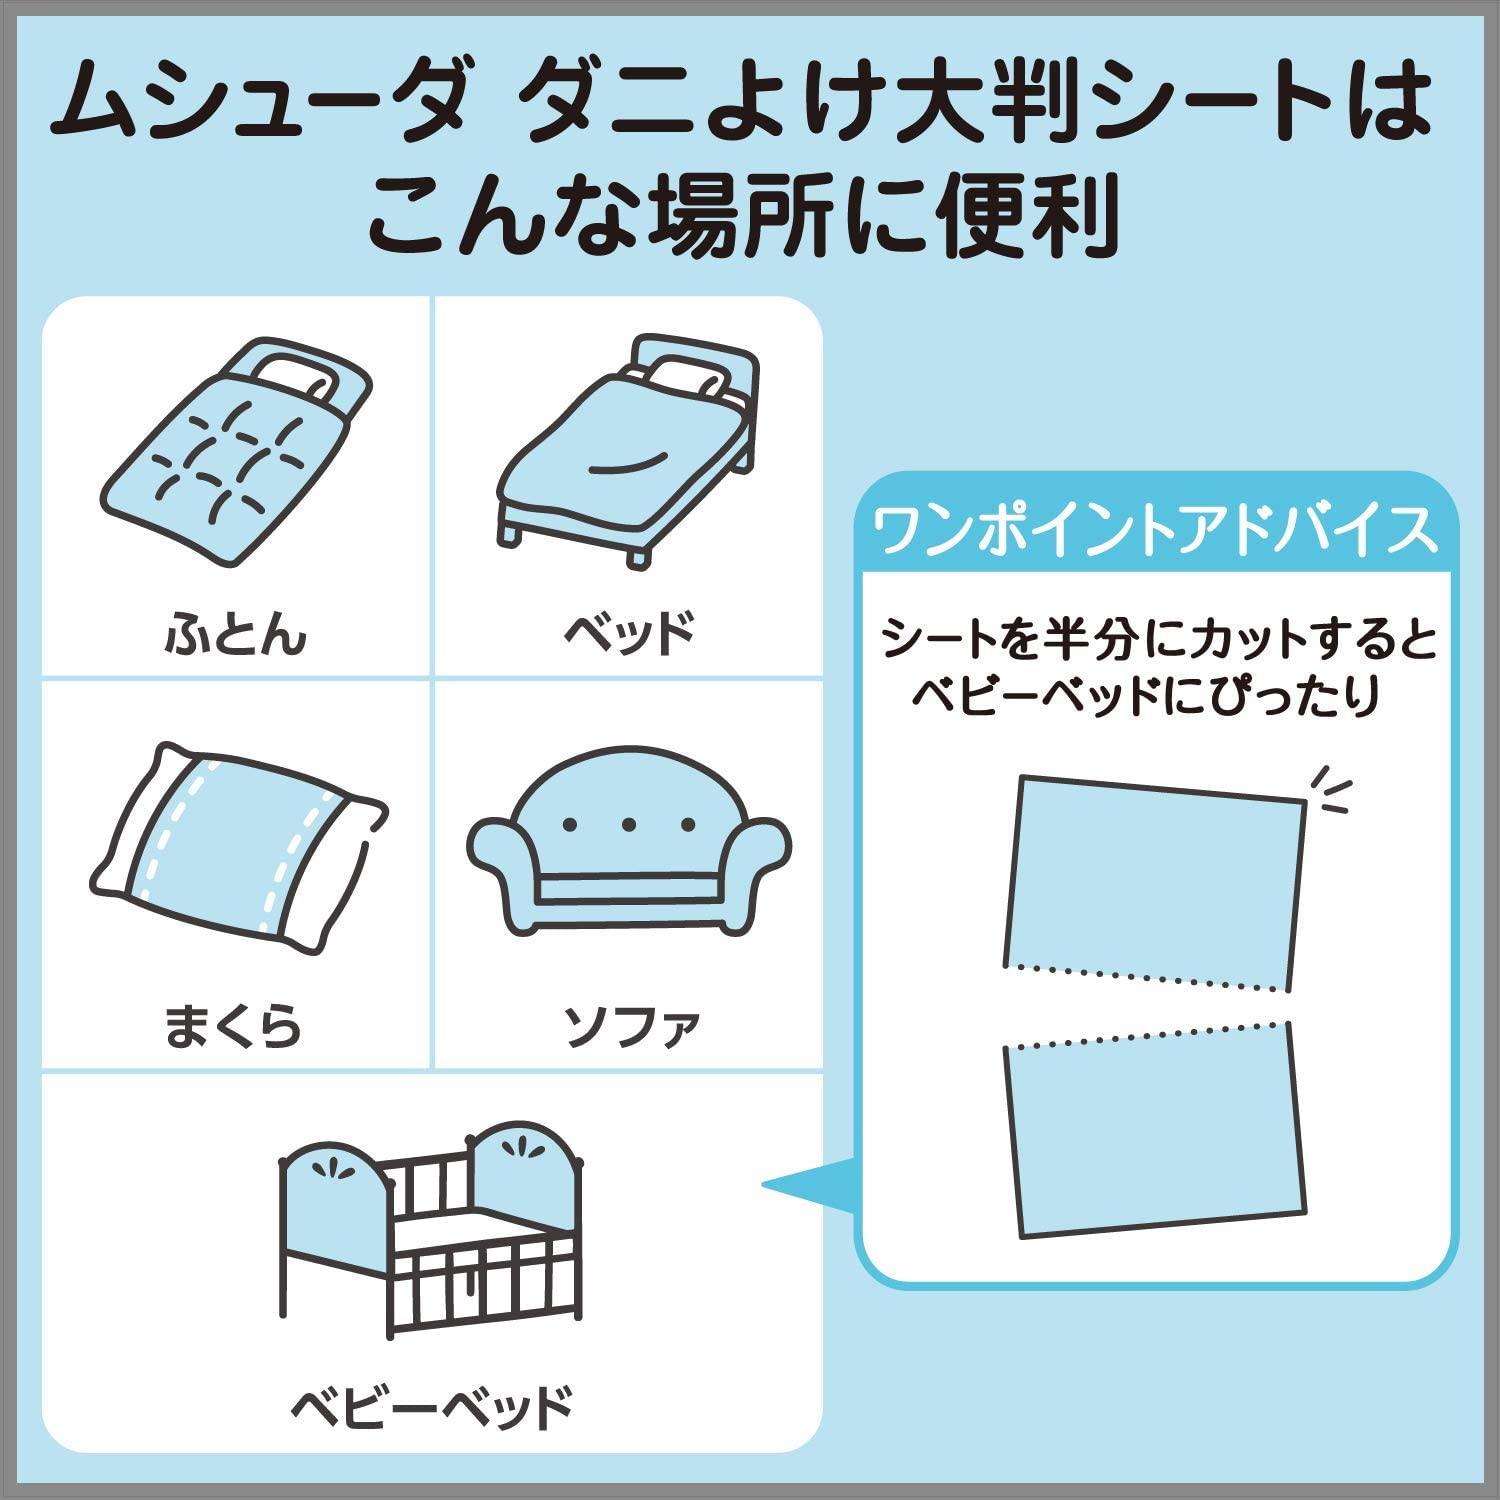 [6-PACK] S.T. Japan 100% Natural Ingredient Mite Removal Tablets 120*90